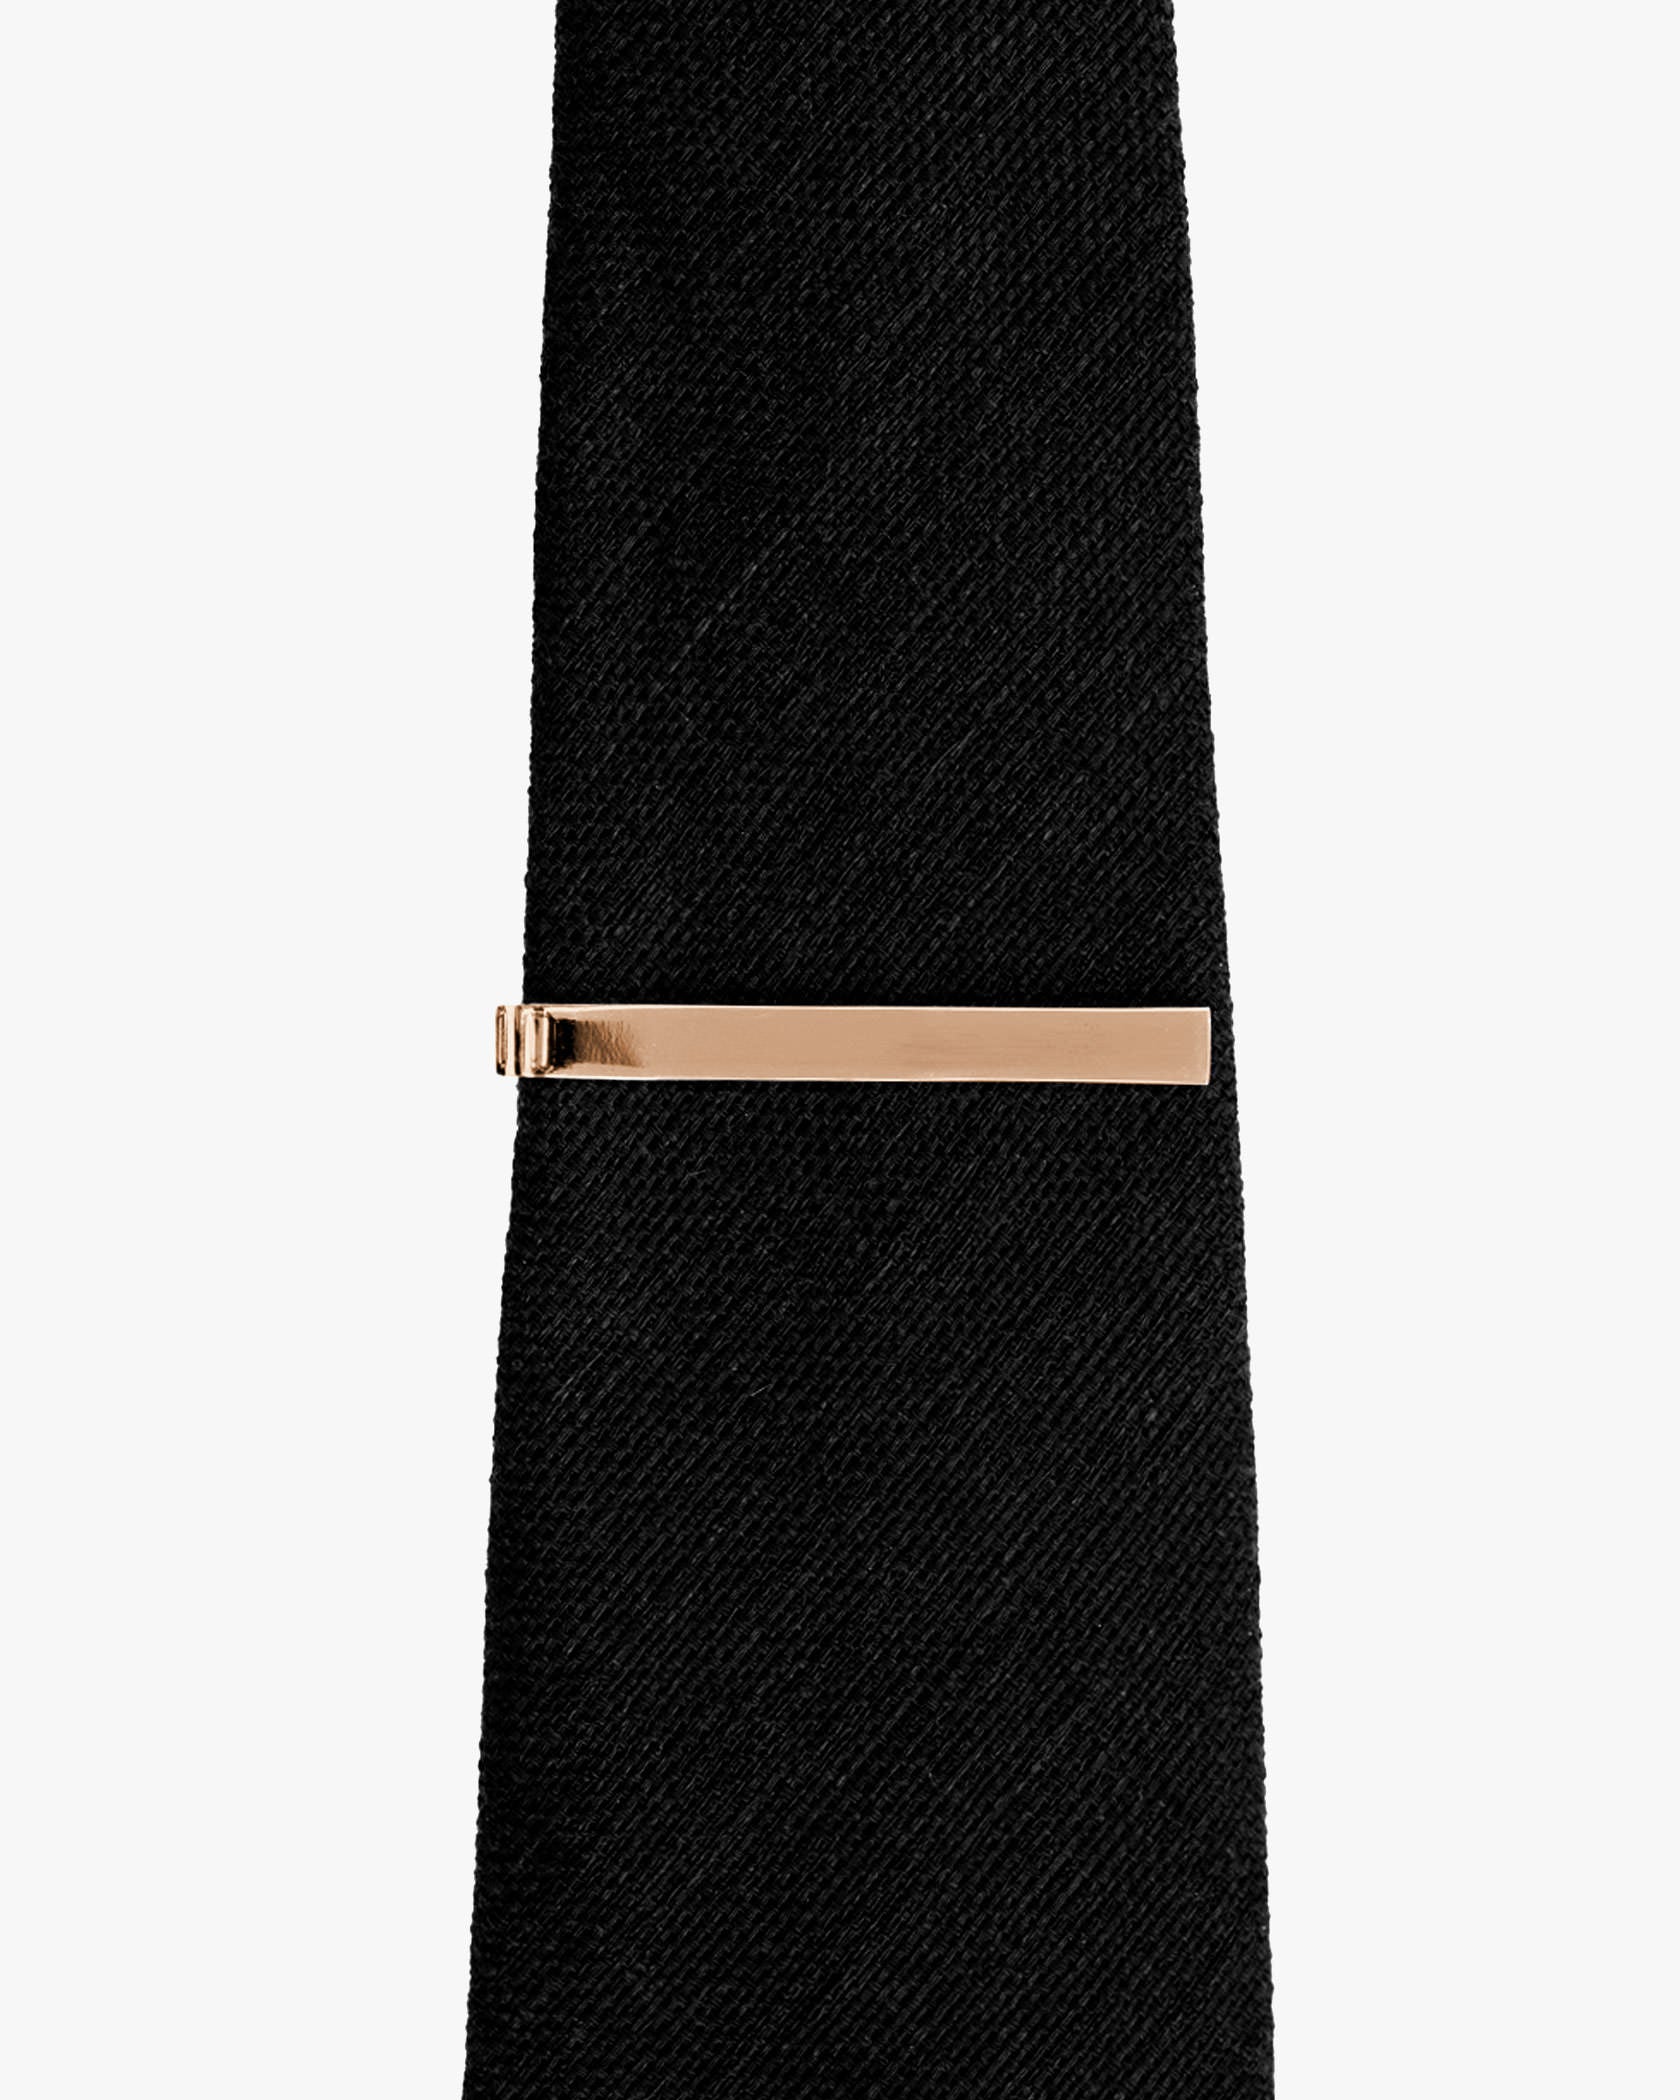 Rose Gold Flat Tie Bar